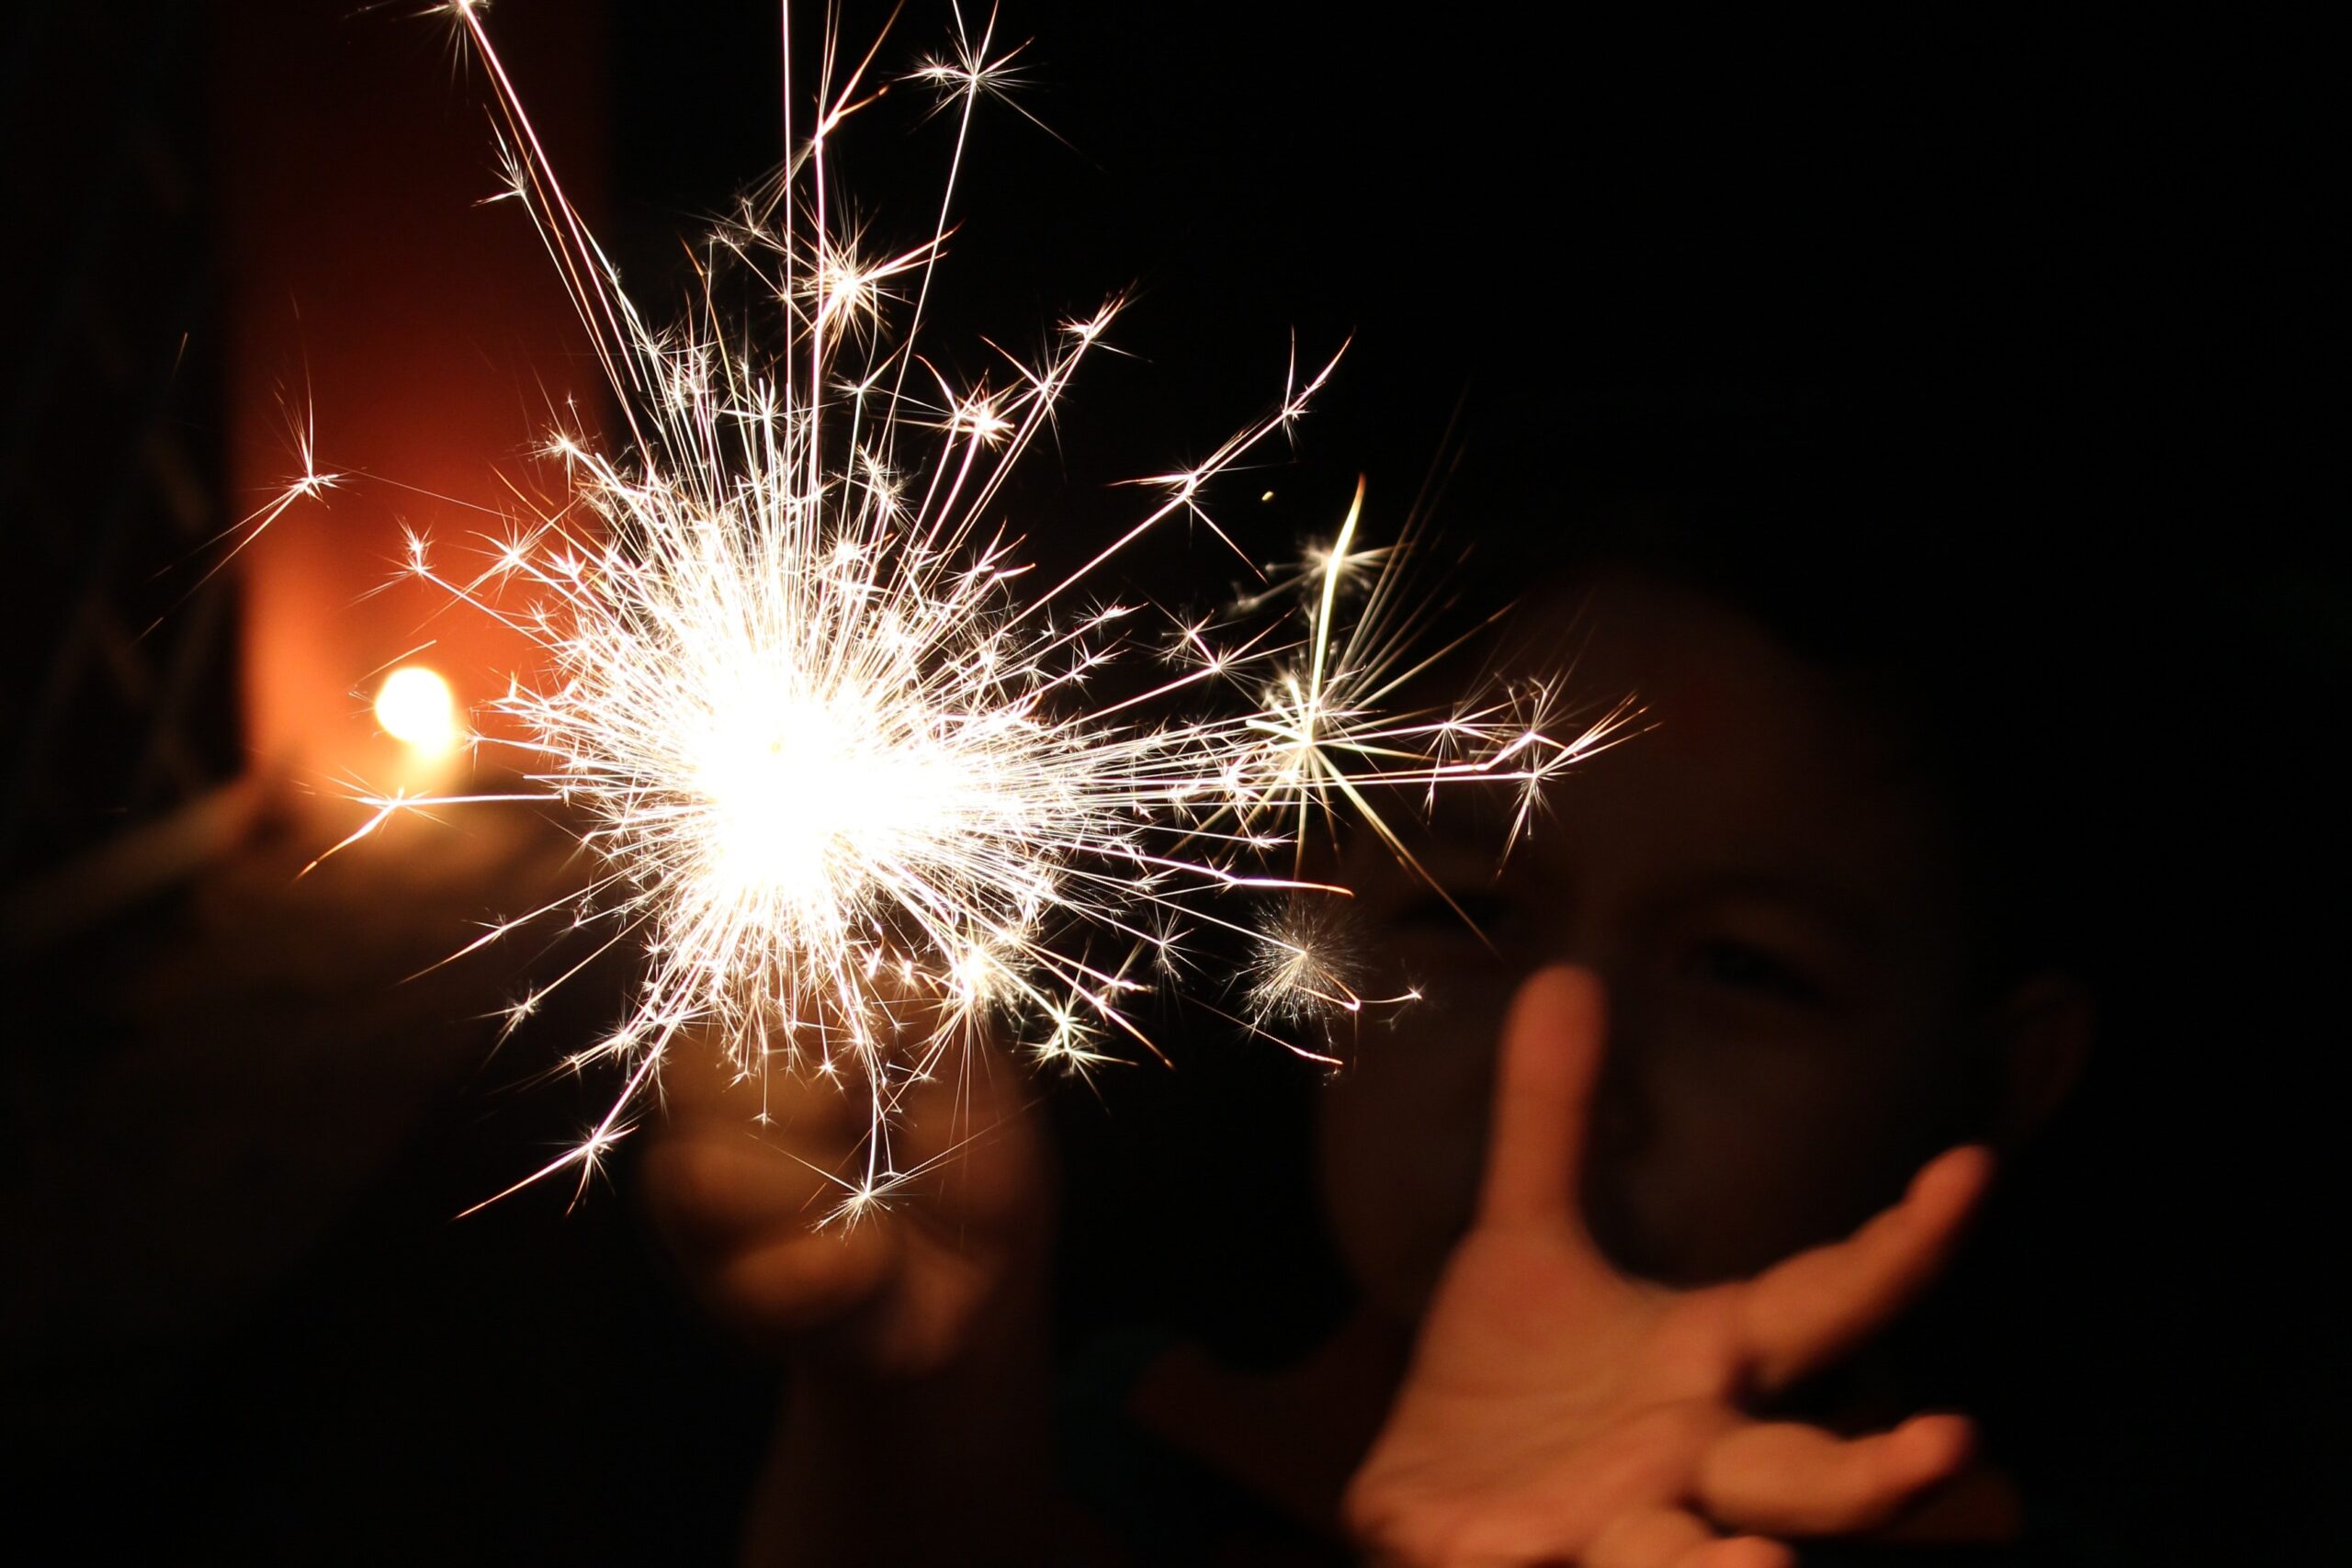 outspread hand underneath a lit sparkler